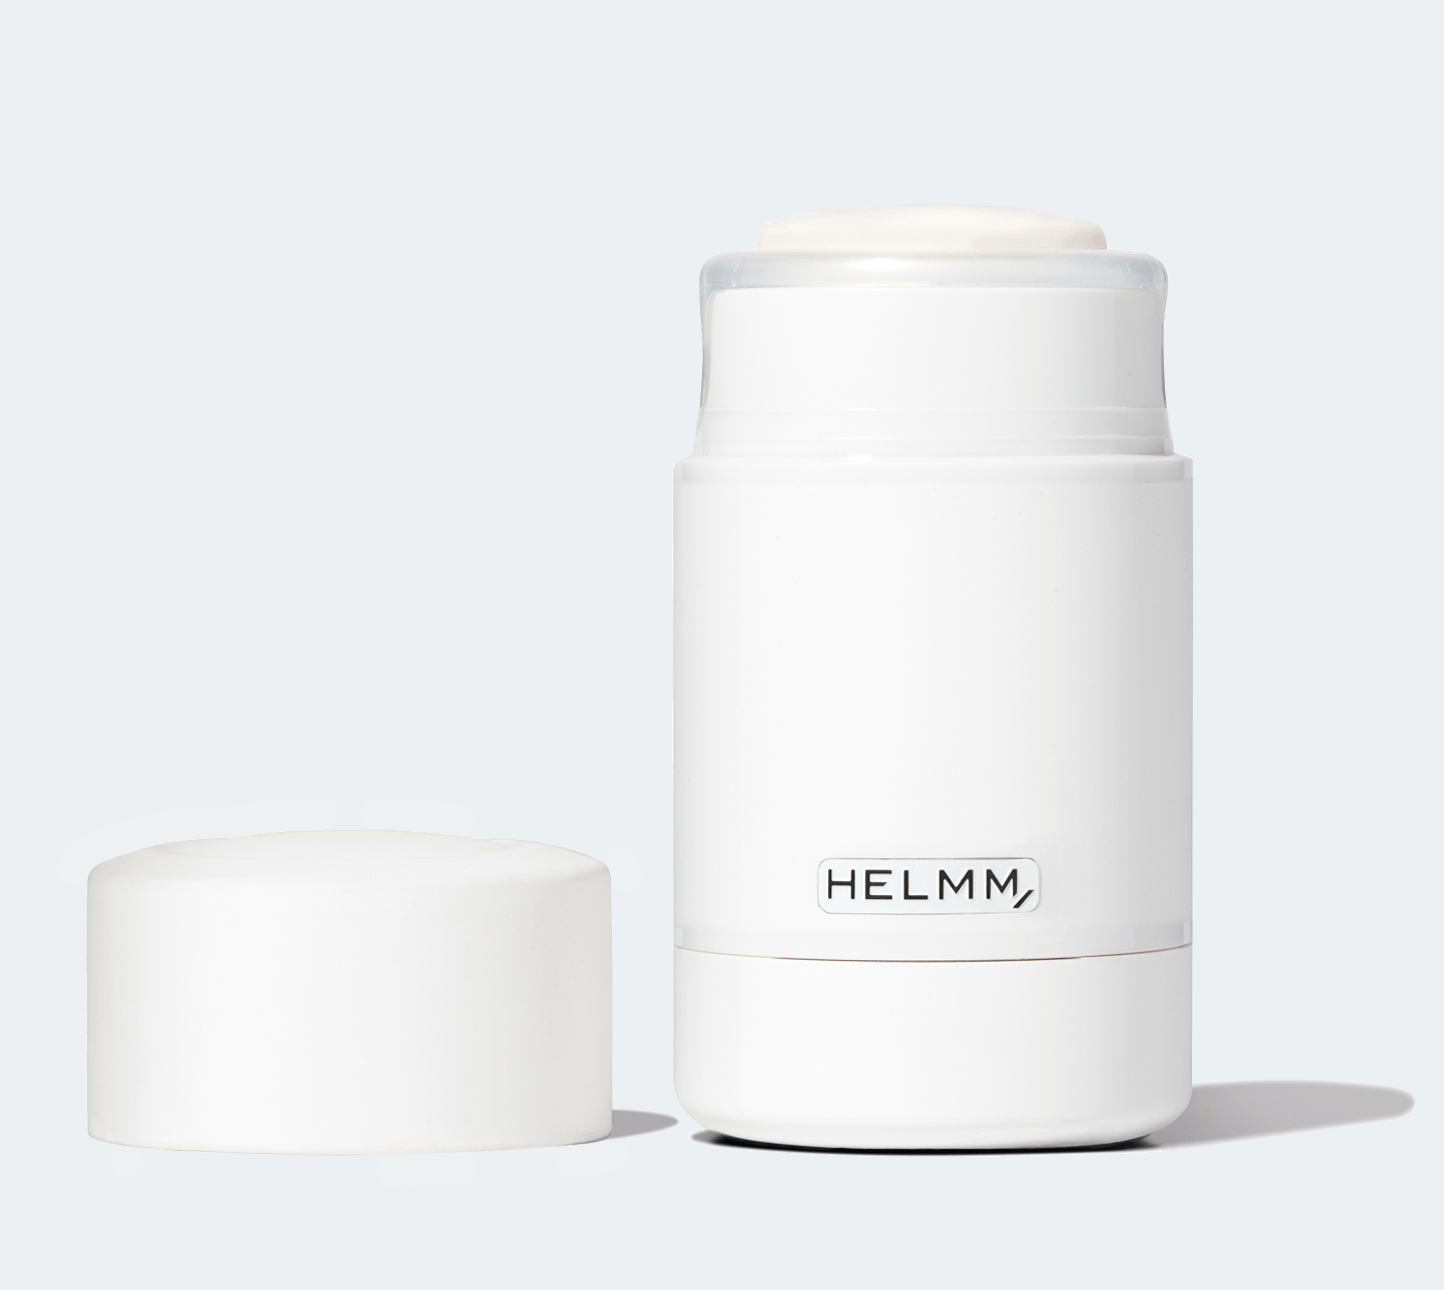 Helmm Deodorant Start Kit $18.